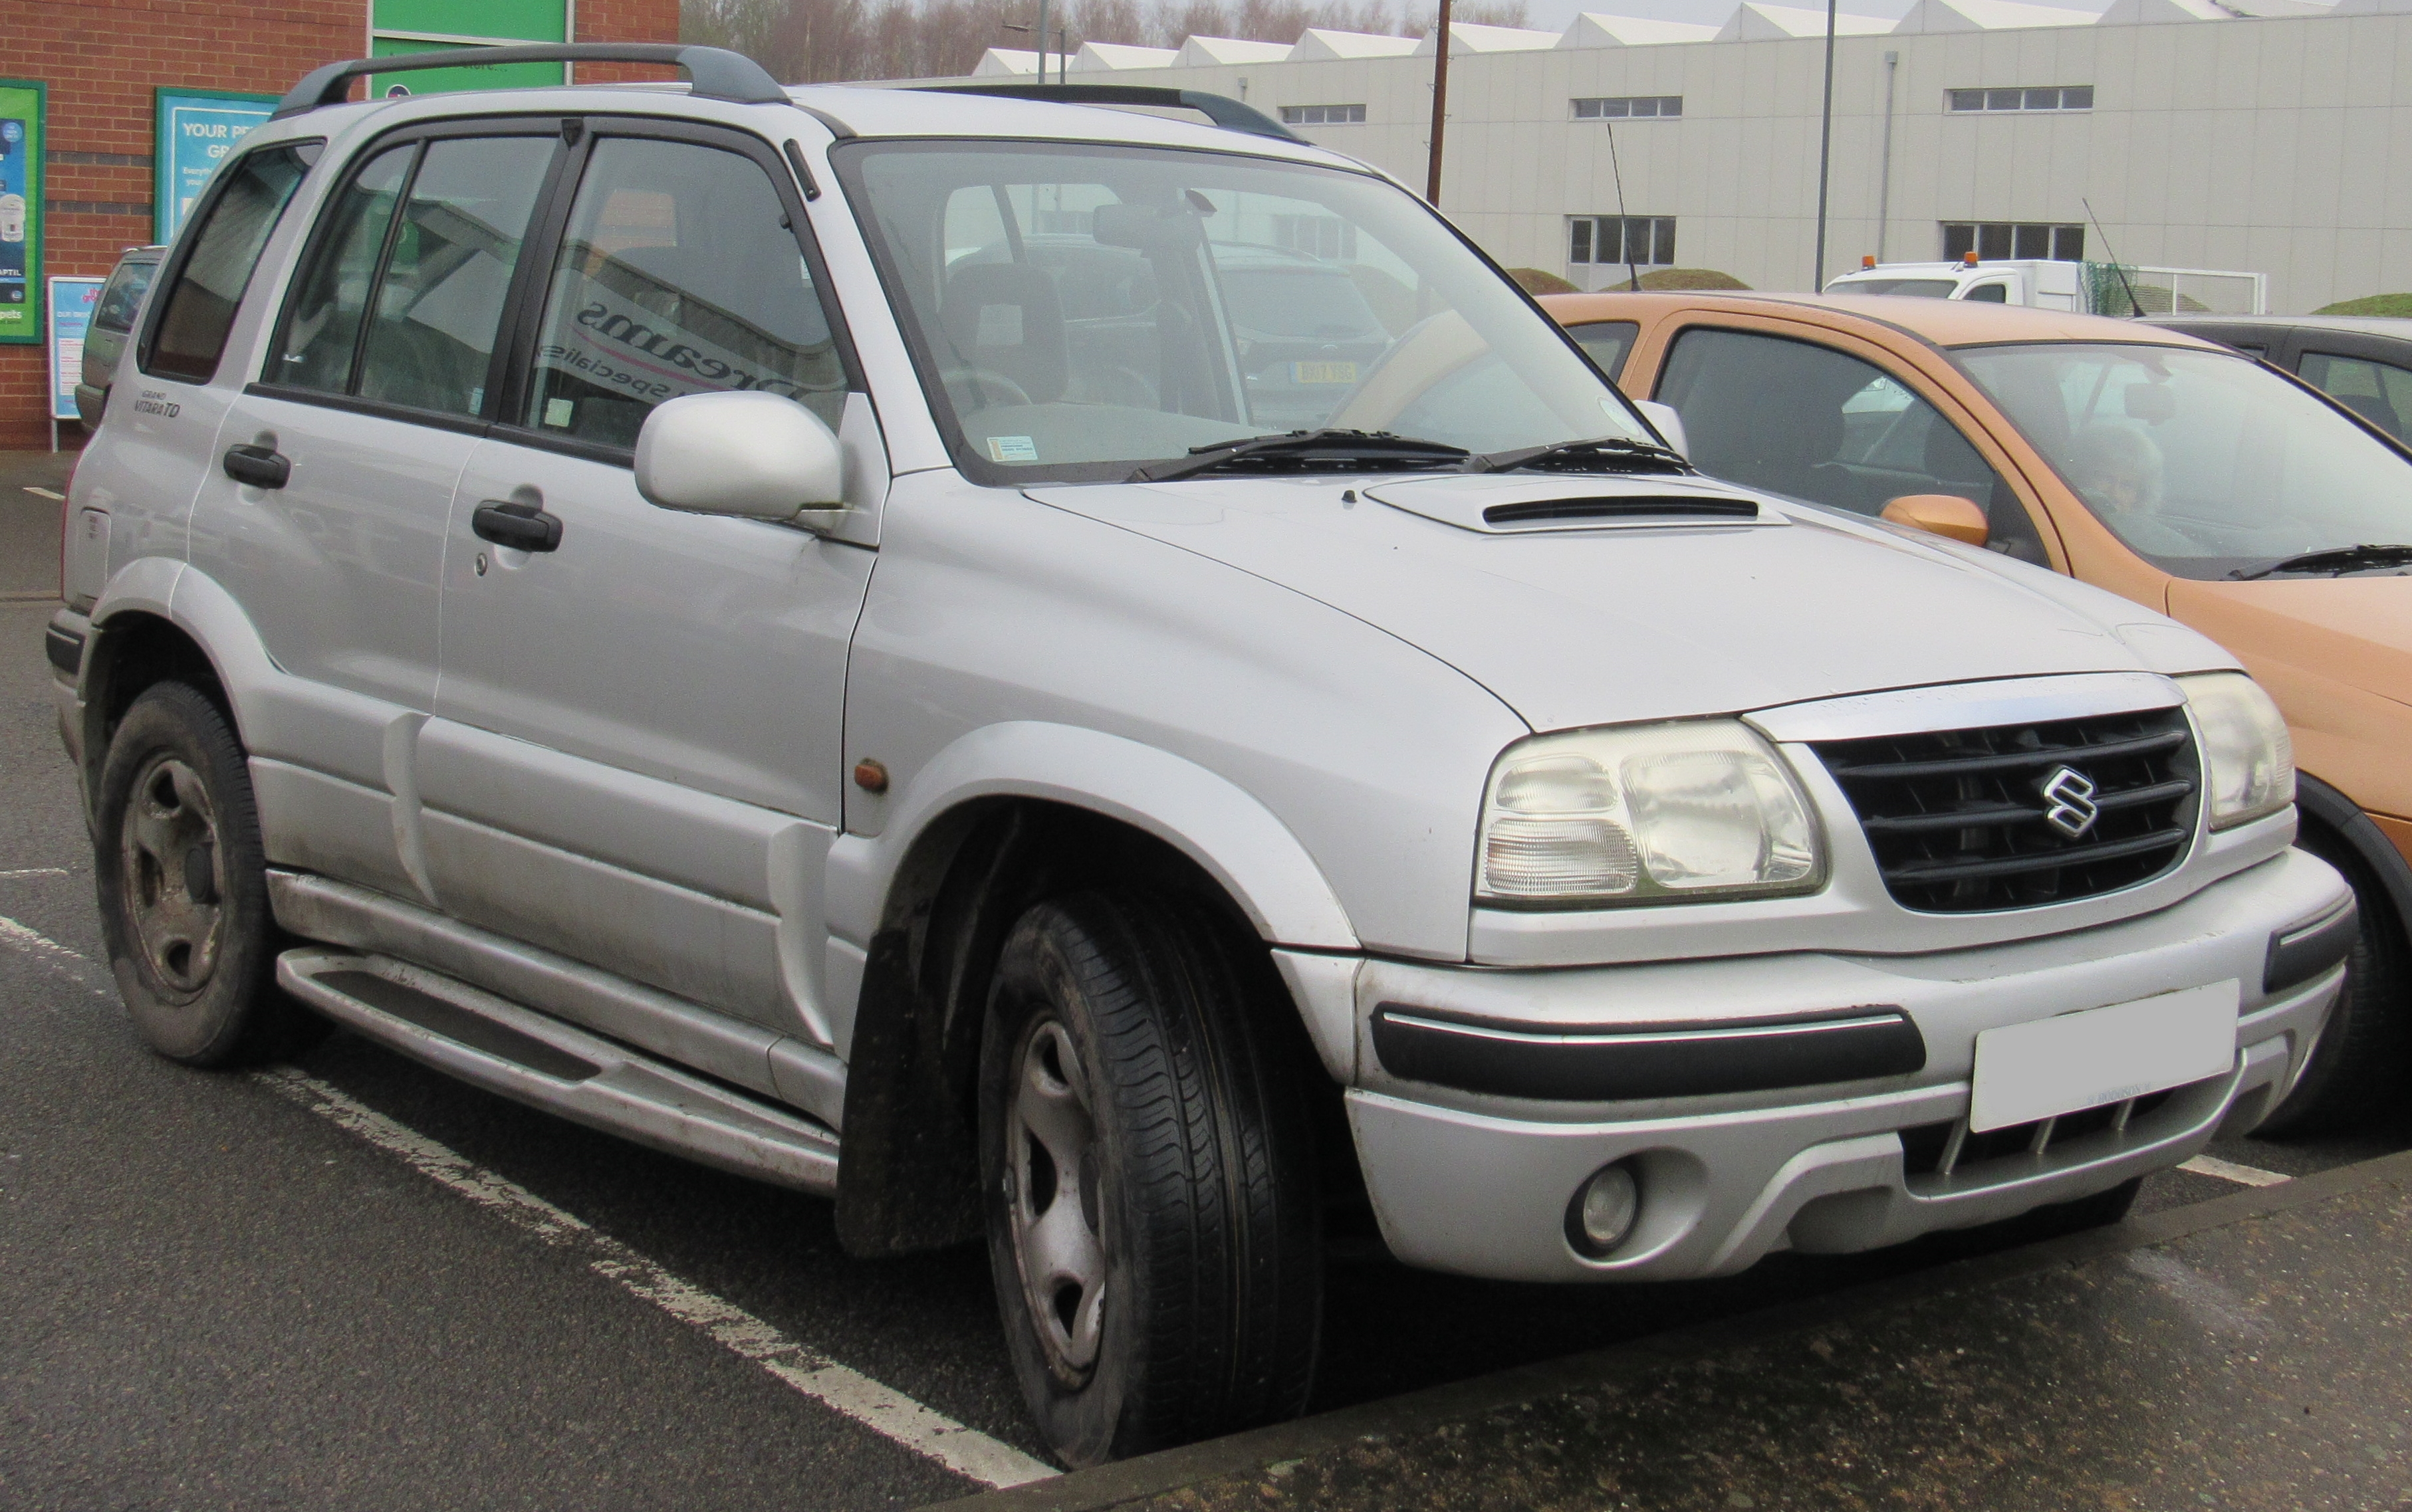 File:2002 Suzuki Grand Vitara TD facelift 2.0.jpg - Wikimedia Commons